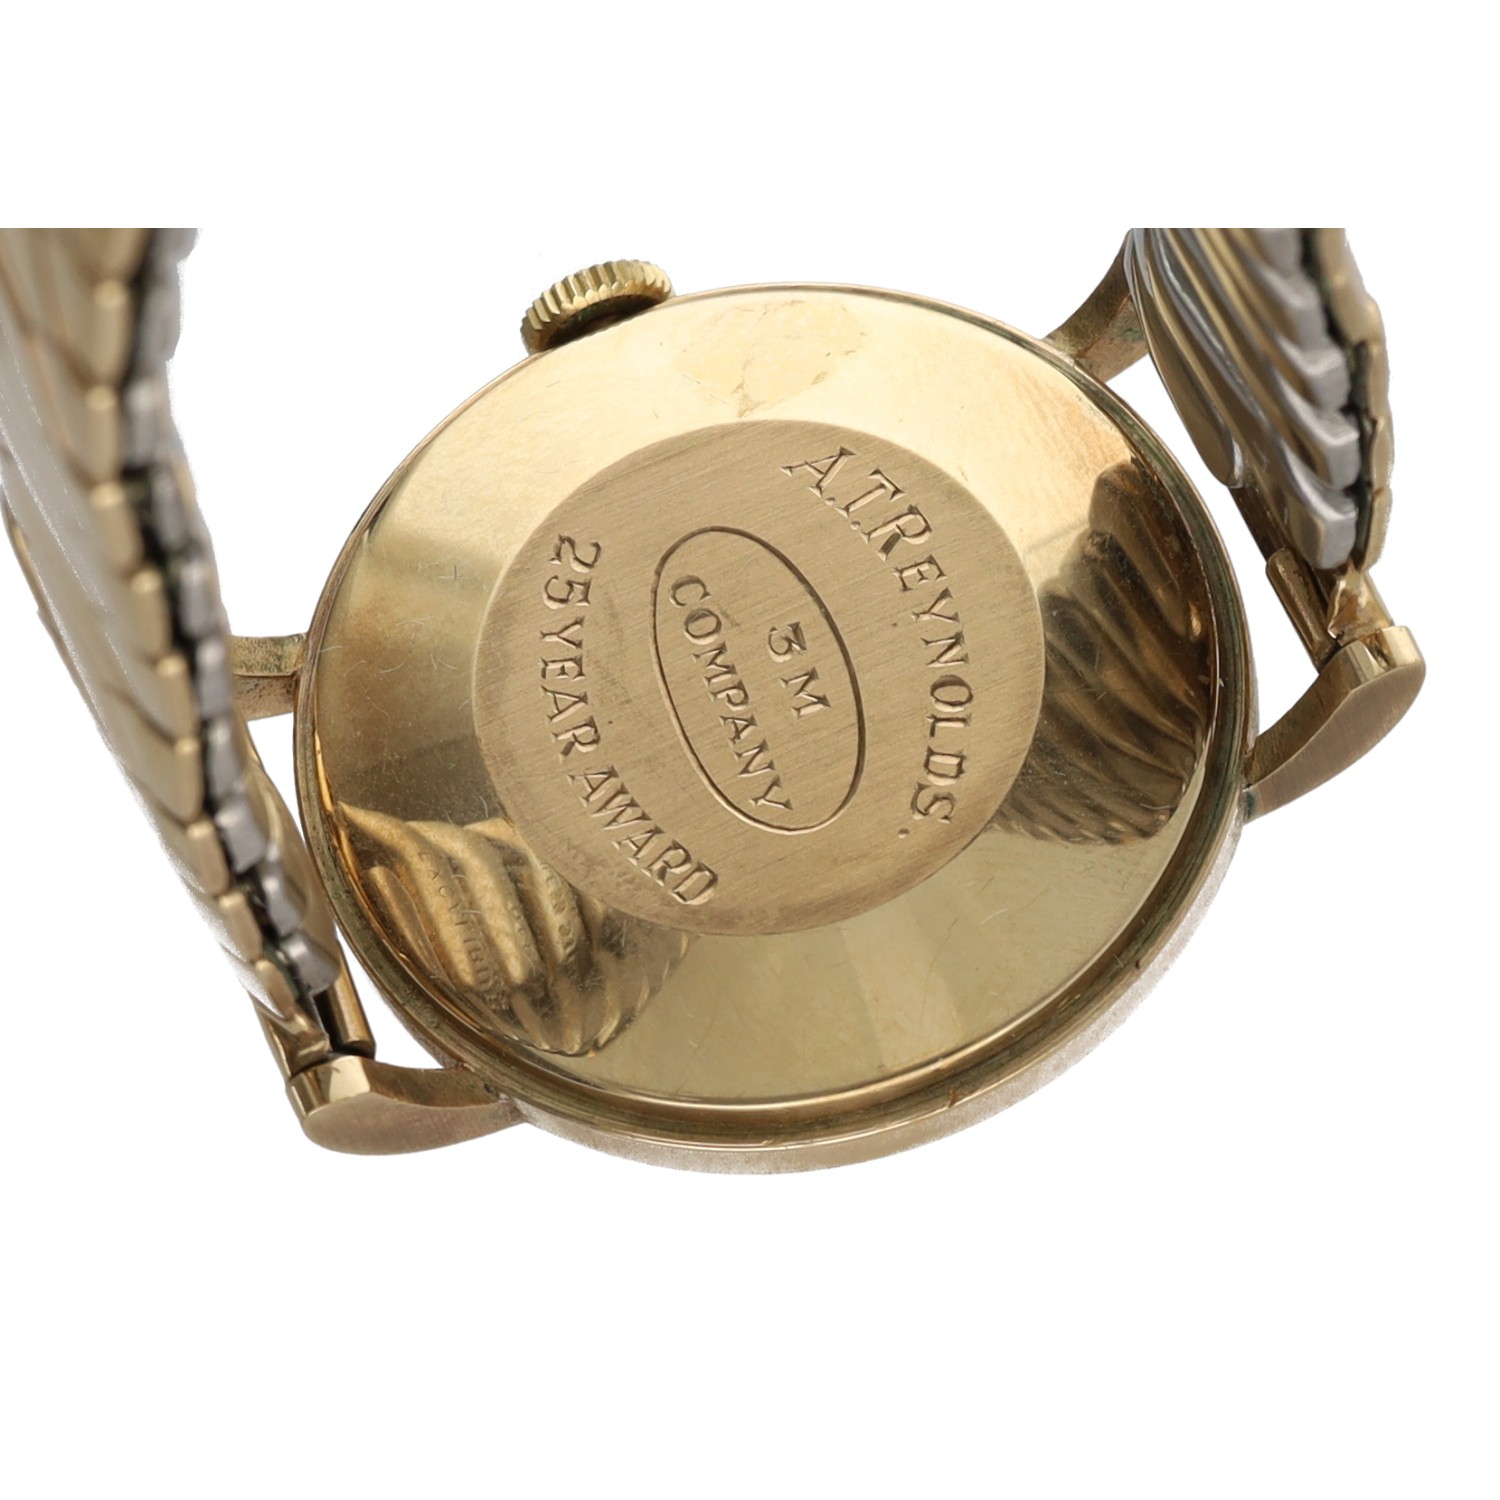 Longines 9ct gentleman's wristwatch, case no. 924, serial no. 9511243, circa 1954, circular silvered - Image 2 of 2